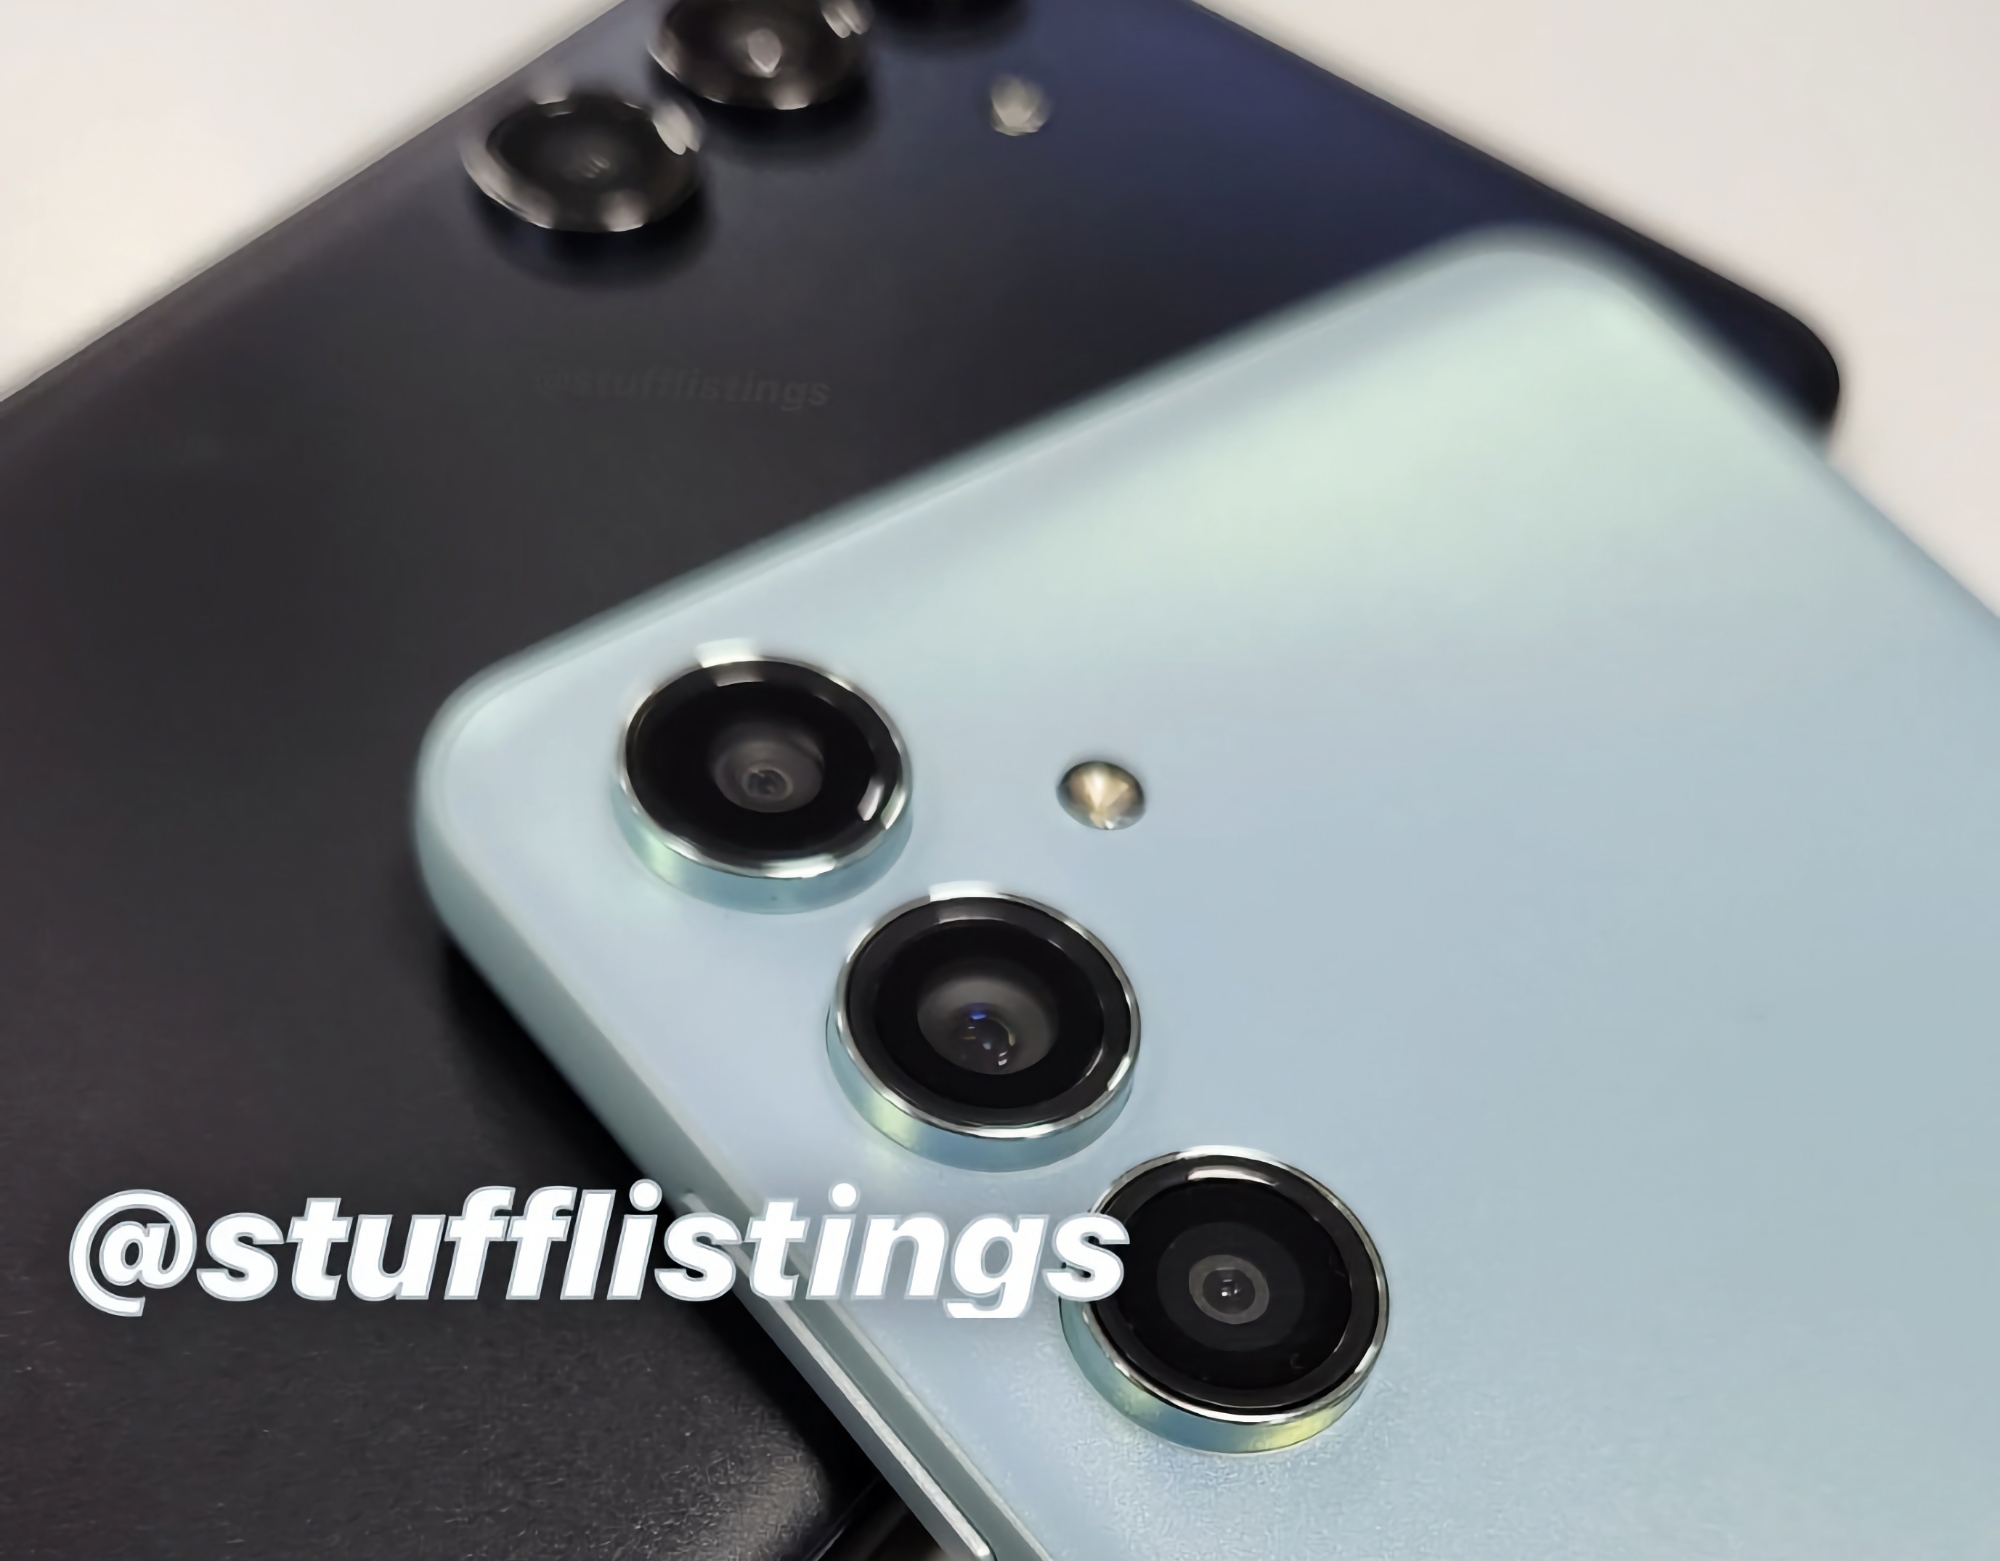 Samsung Galaxy M55 5G i to farver og med et tredobbelt kamera er dukket op på et foto